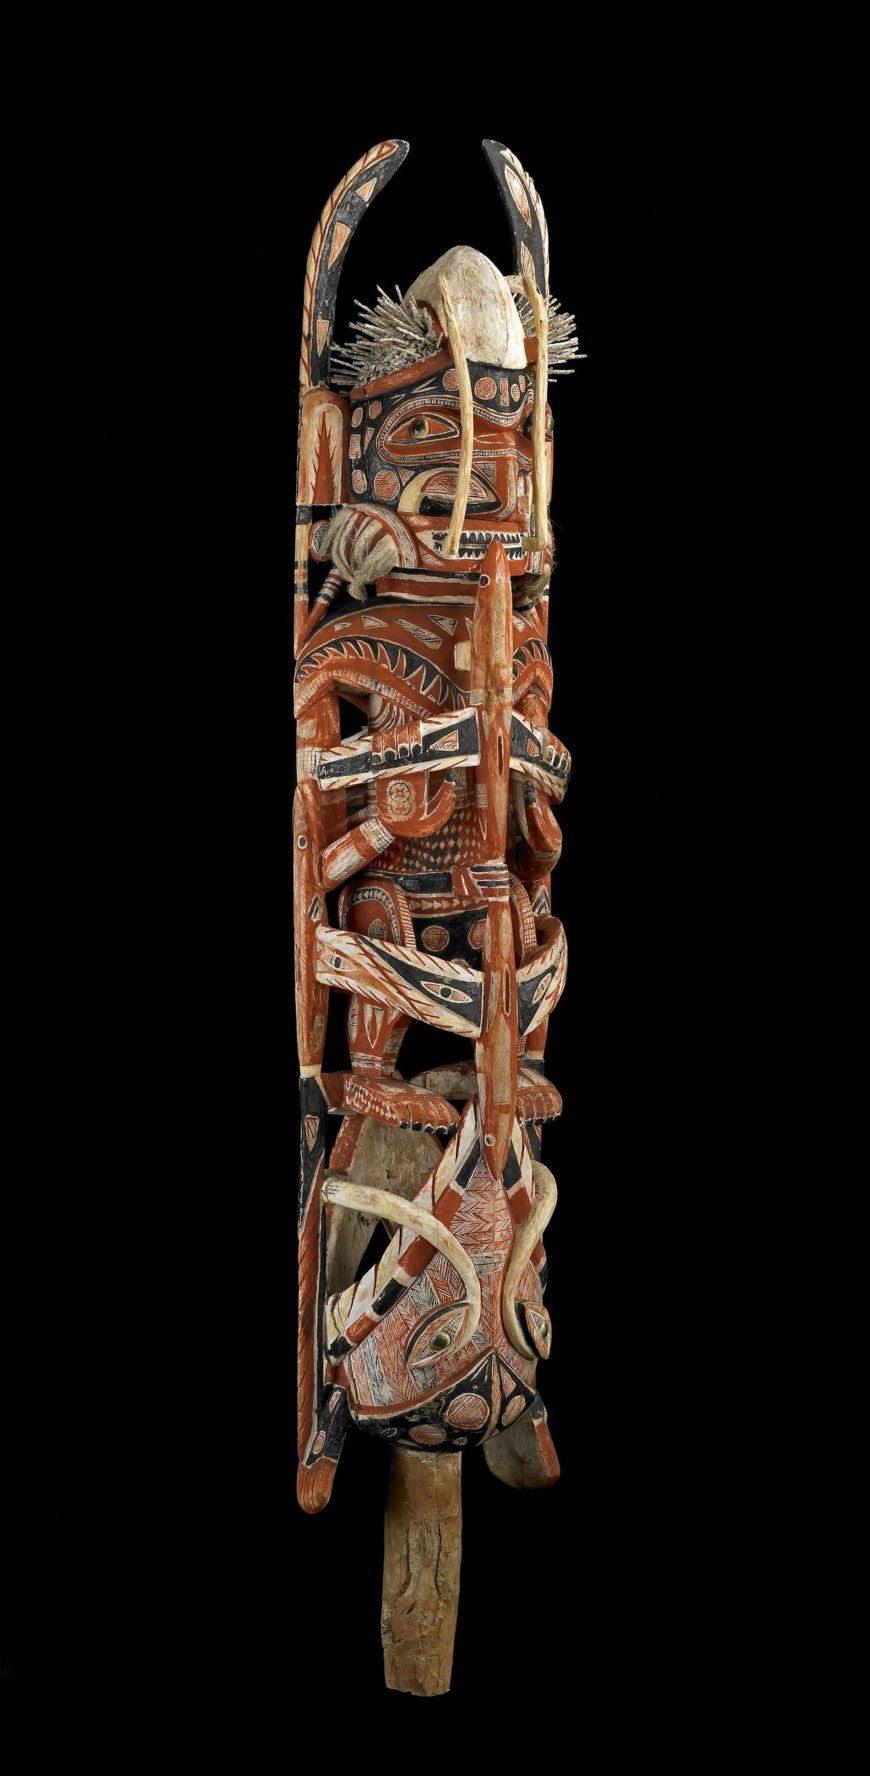 Malangan figure, 1882–83 C.E., wood, vegetable fiber, pigment, and shell (turbo petholatus opercula), 122 cm high, north coast of New Ireland, Papua New Guinea (© Trustees of the British Museum)